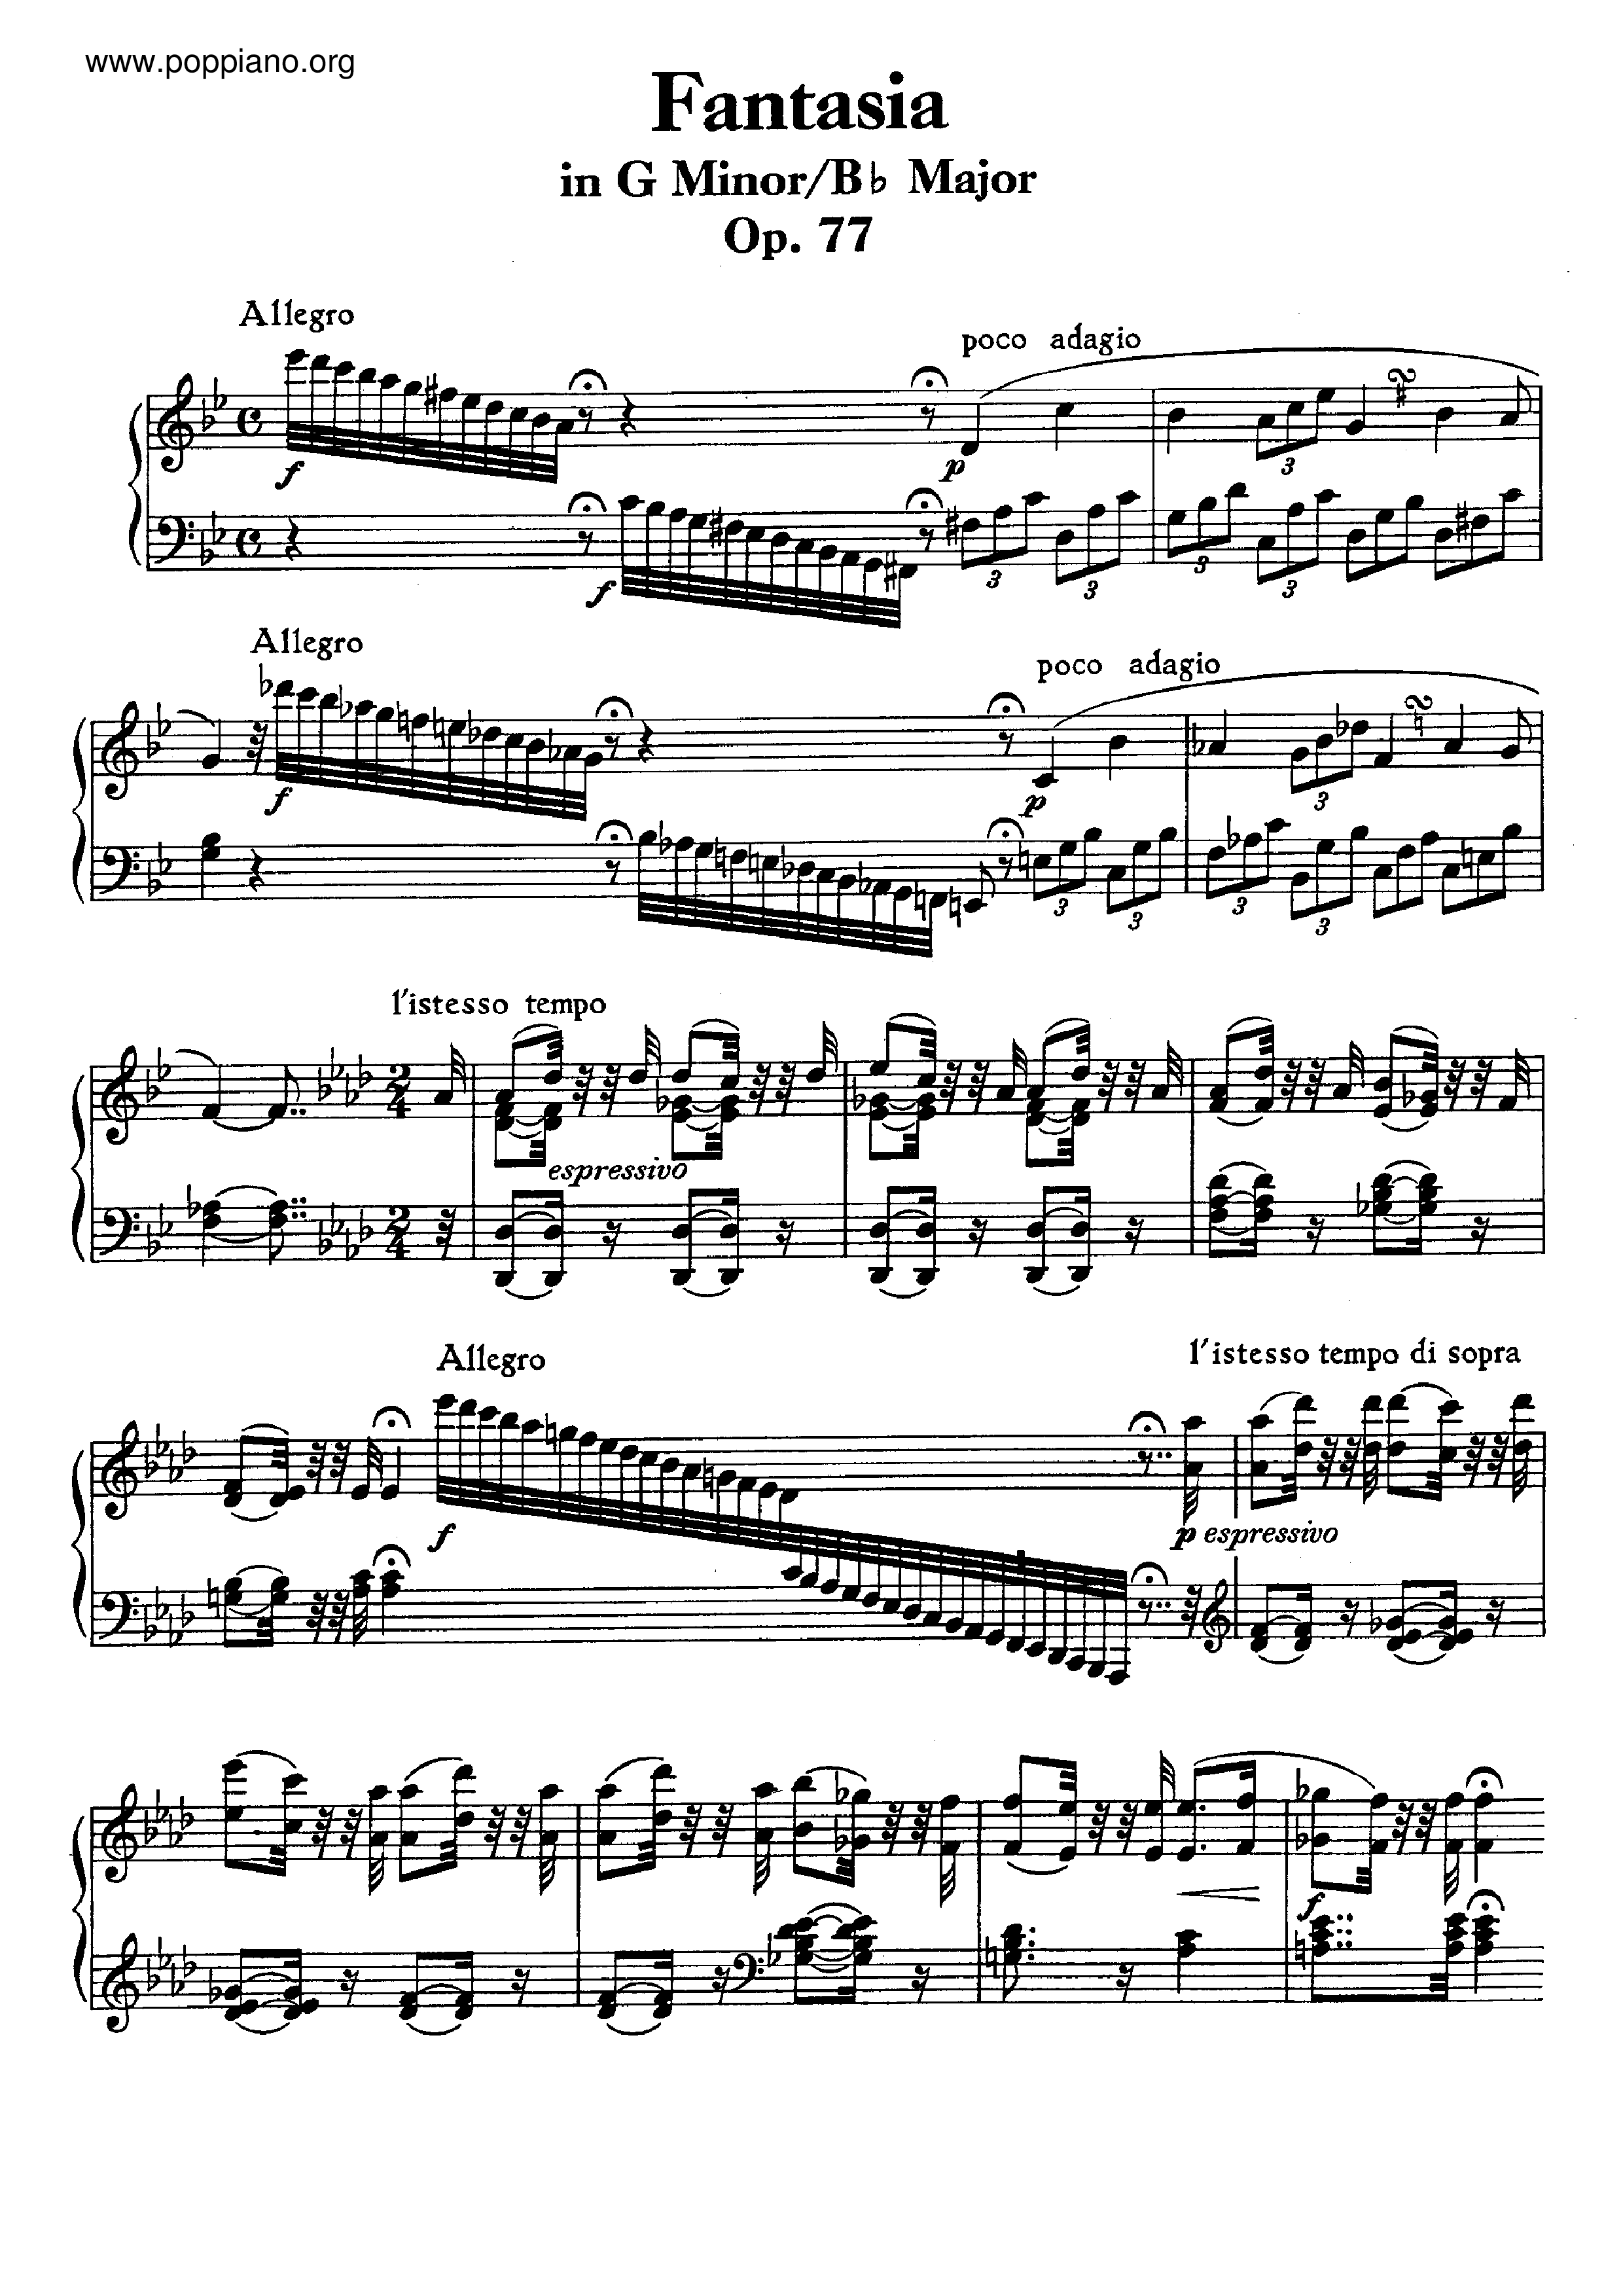 Fantasia in G Minor / Bb Major, Op. 77ピアノ譜